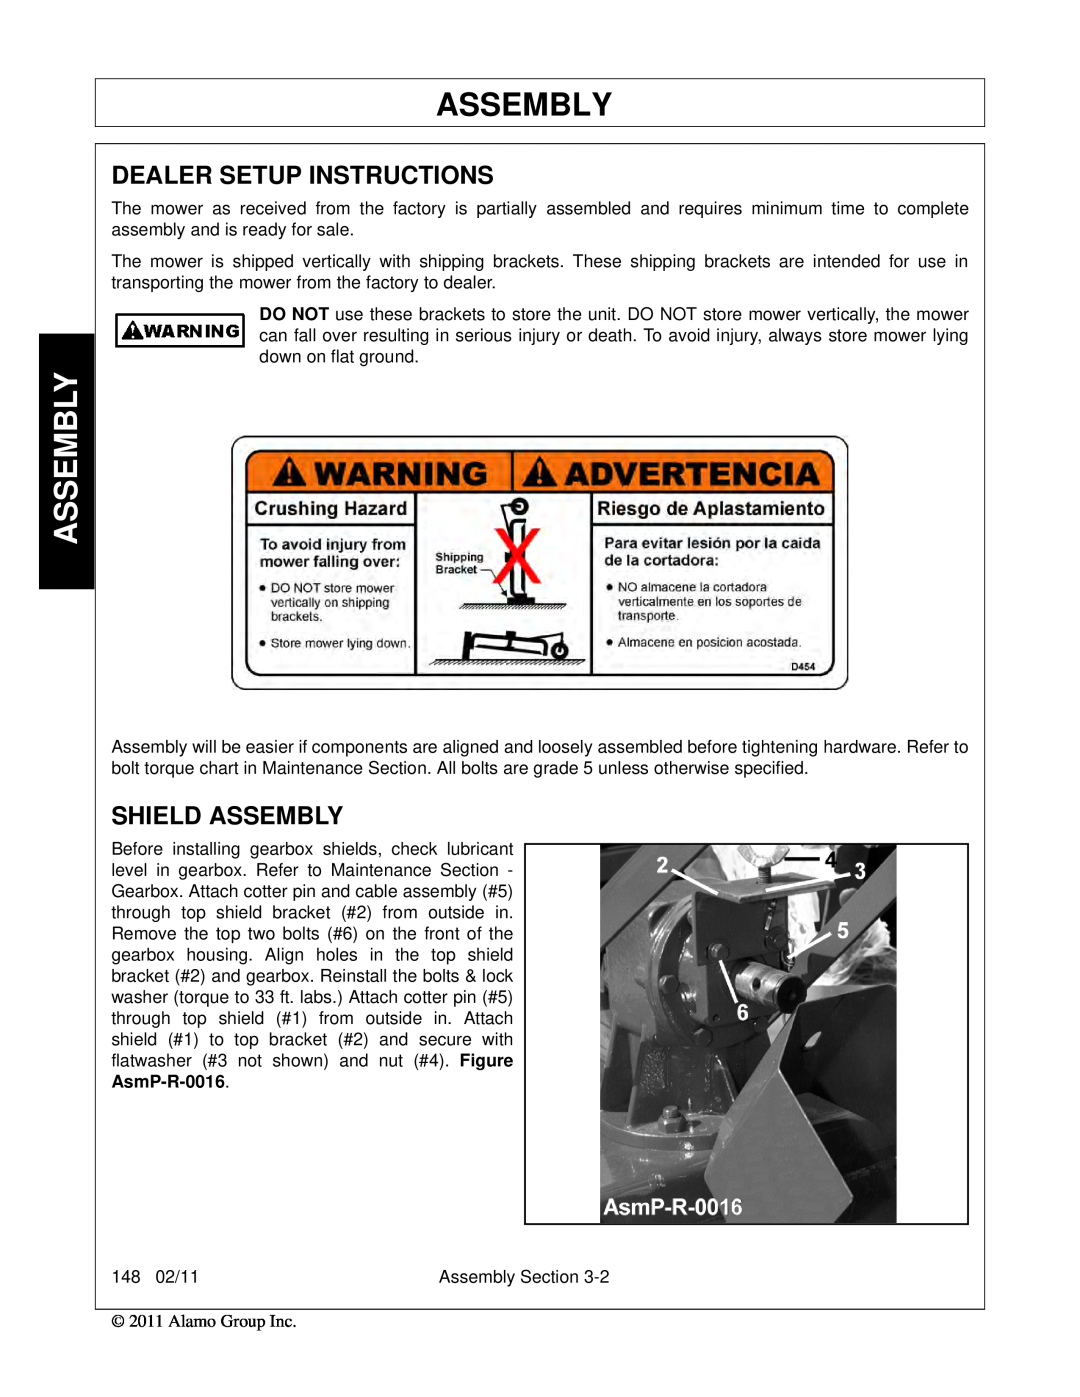 Rhino Mounts 148 manual Dealer Setup Instructions, Shield Assembly 